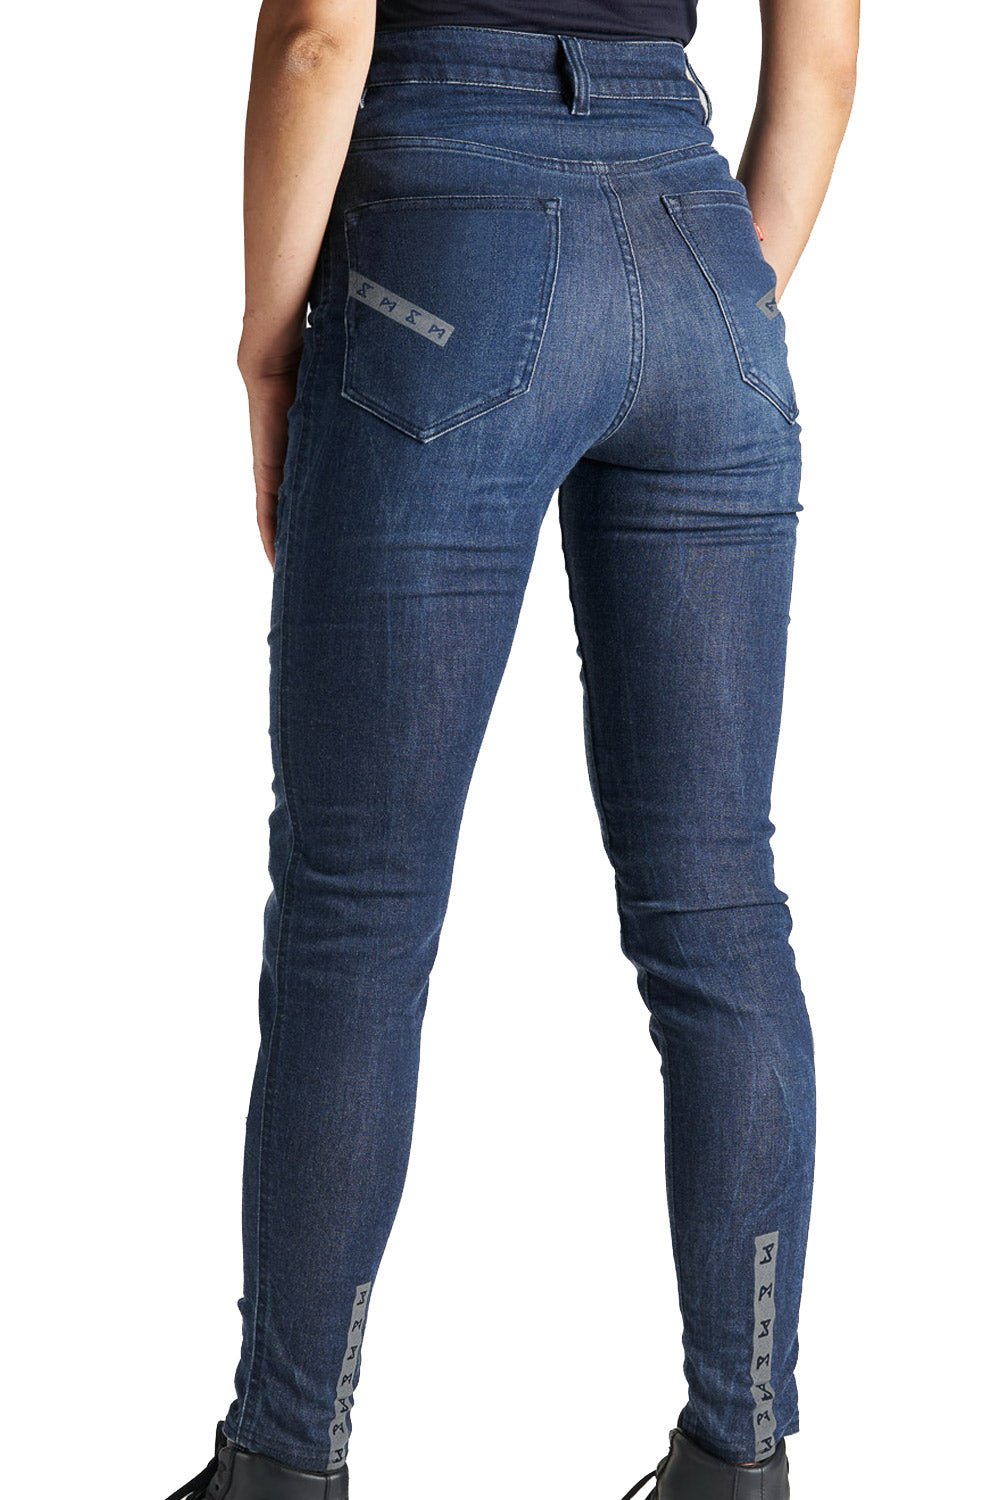 Pando Moto Karldo KEV 01 Cordura Jeans Slim-Fit - Worldwide Shipping!